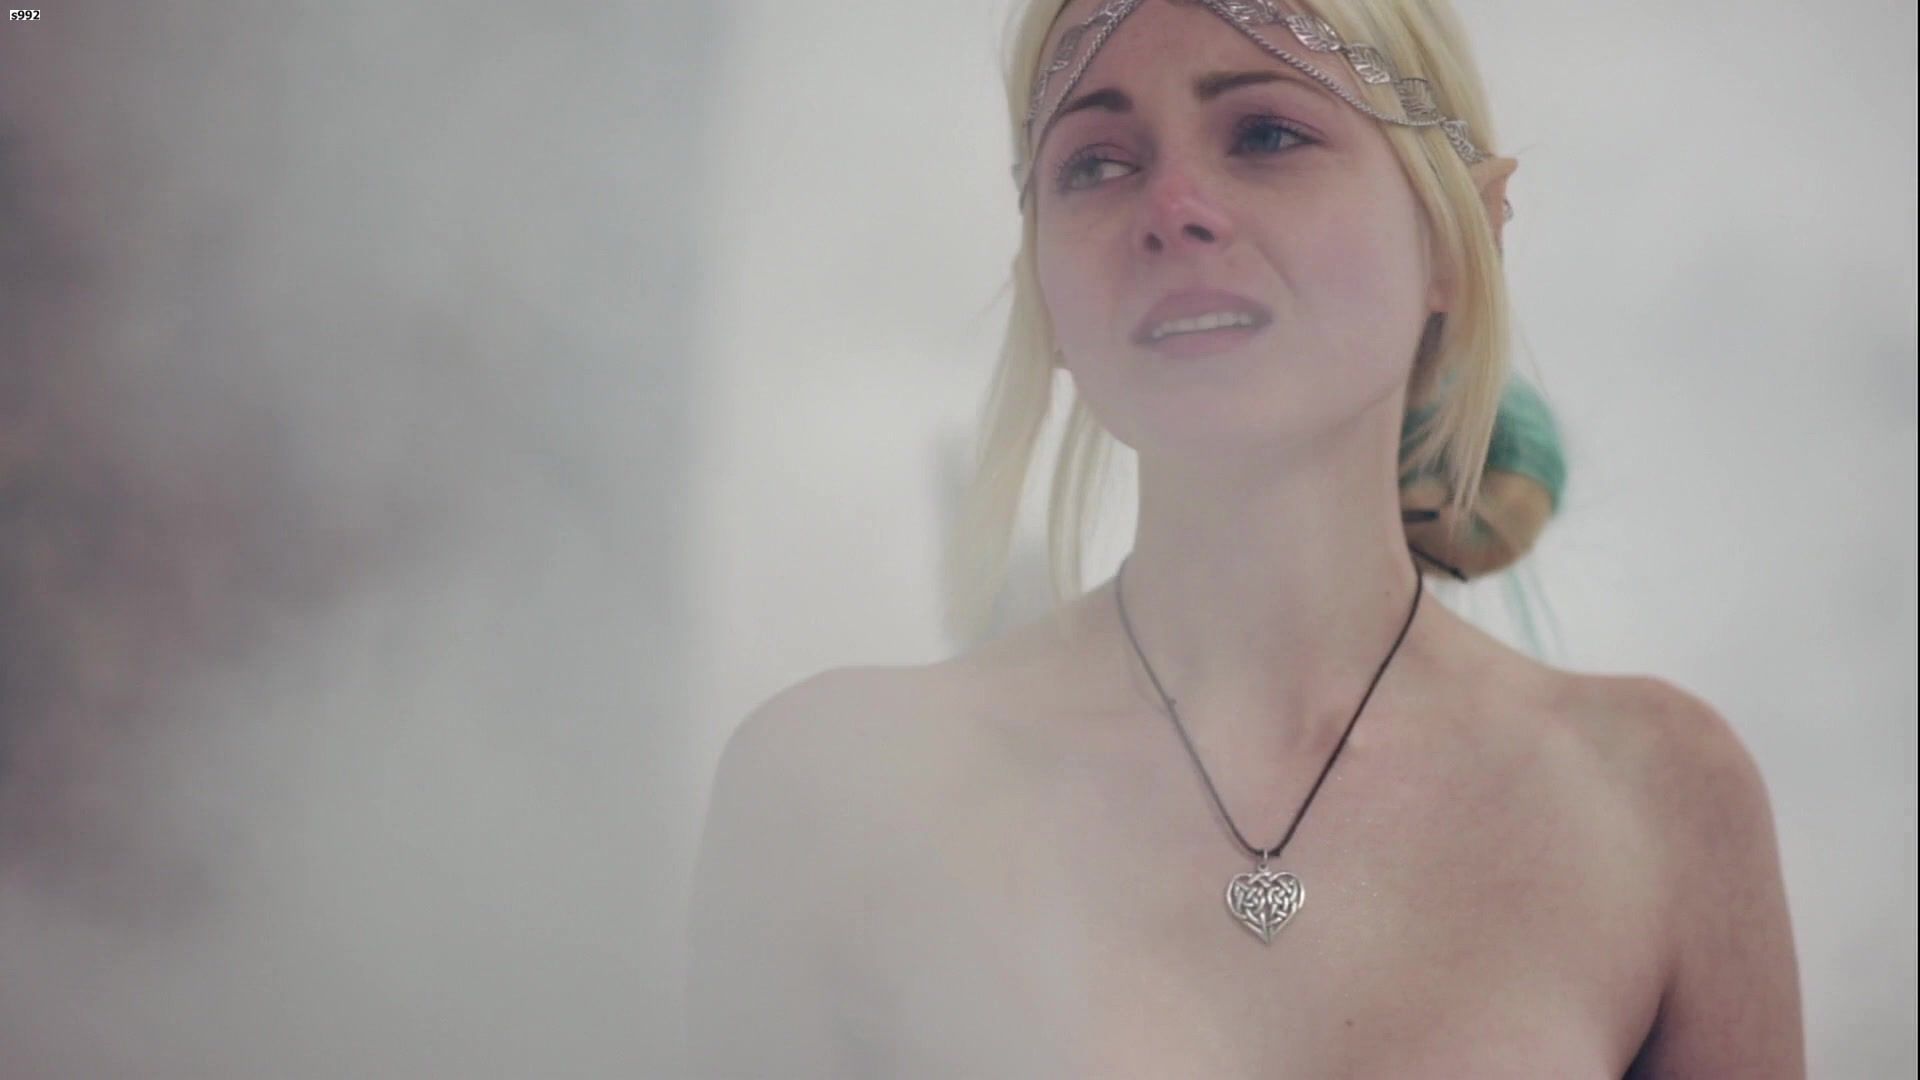 VJav Gemma Donato nude - Sleeping Beauty (2014) Tmz